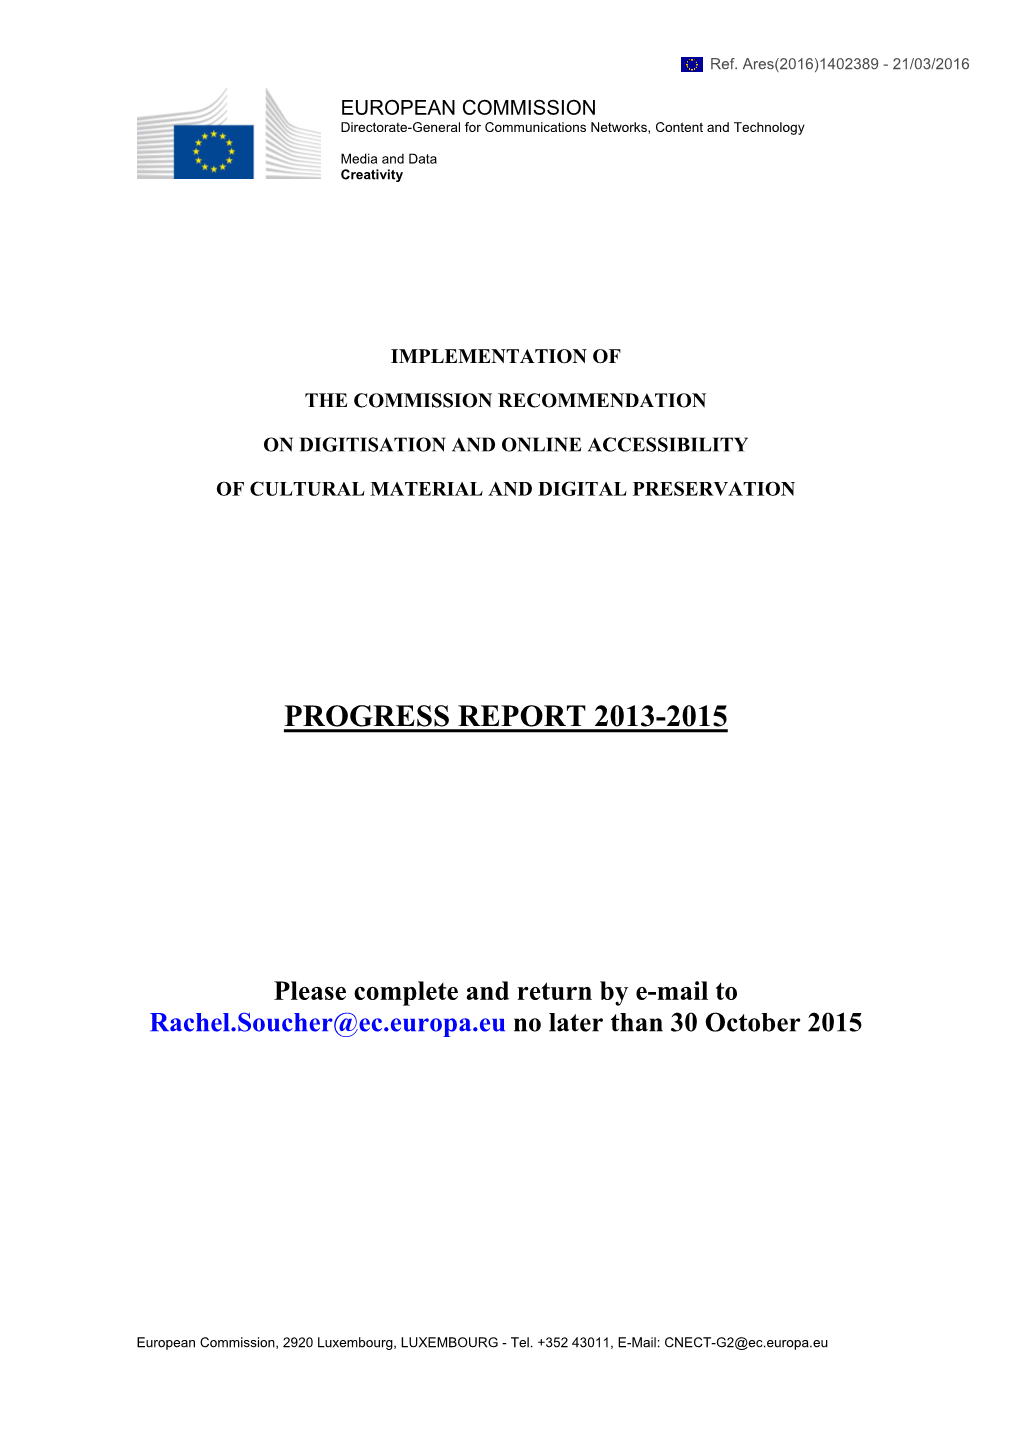 Progress Report 2013-2015